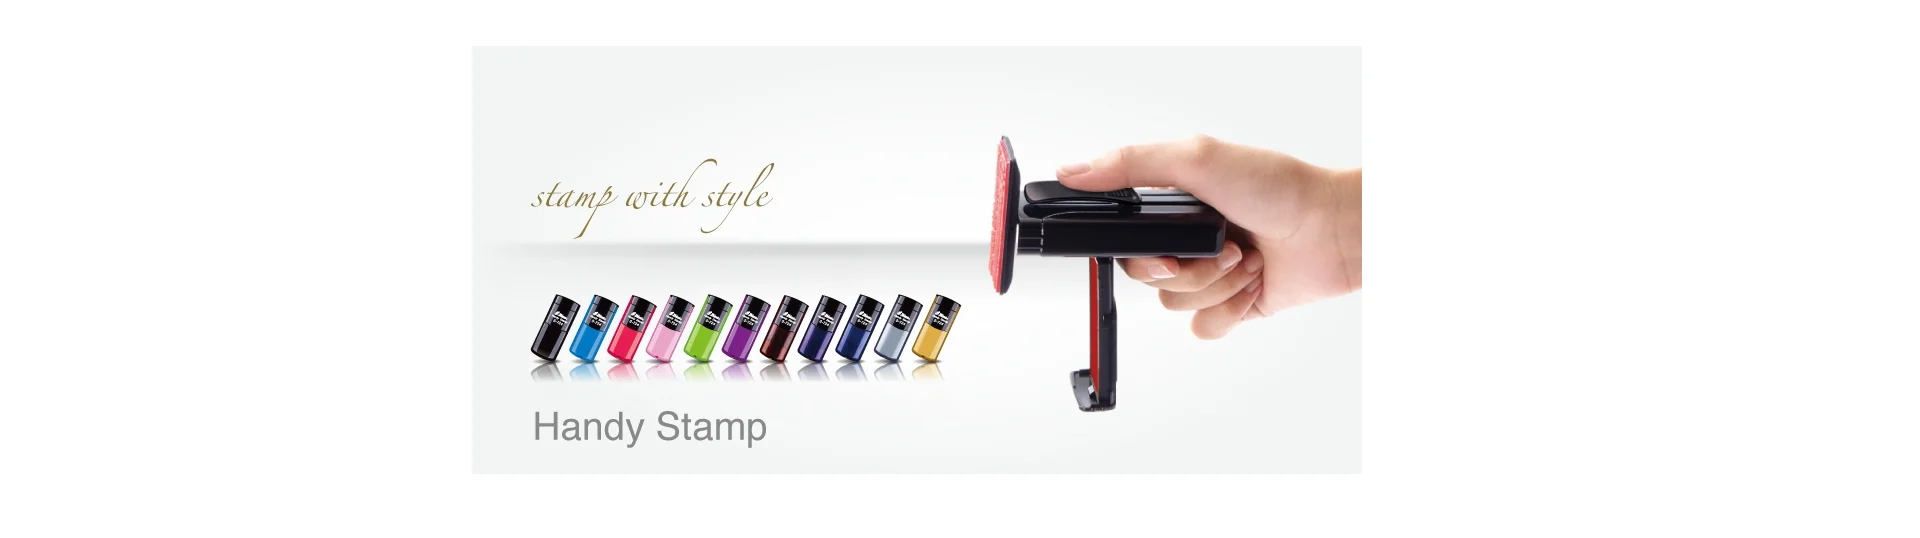 Carimbos Shiny - Handy Stamp